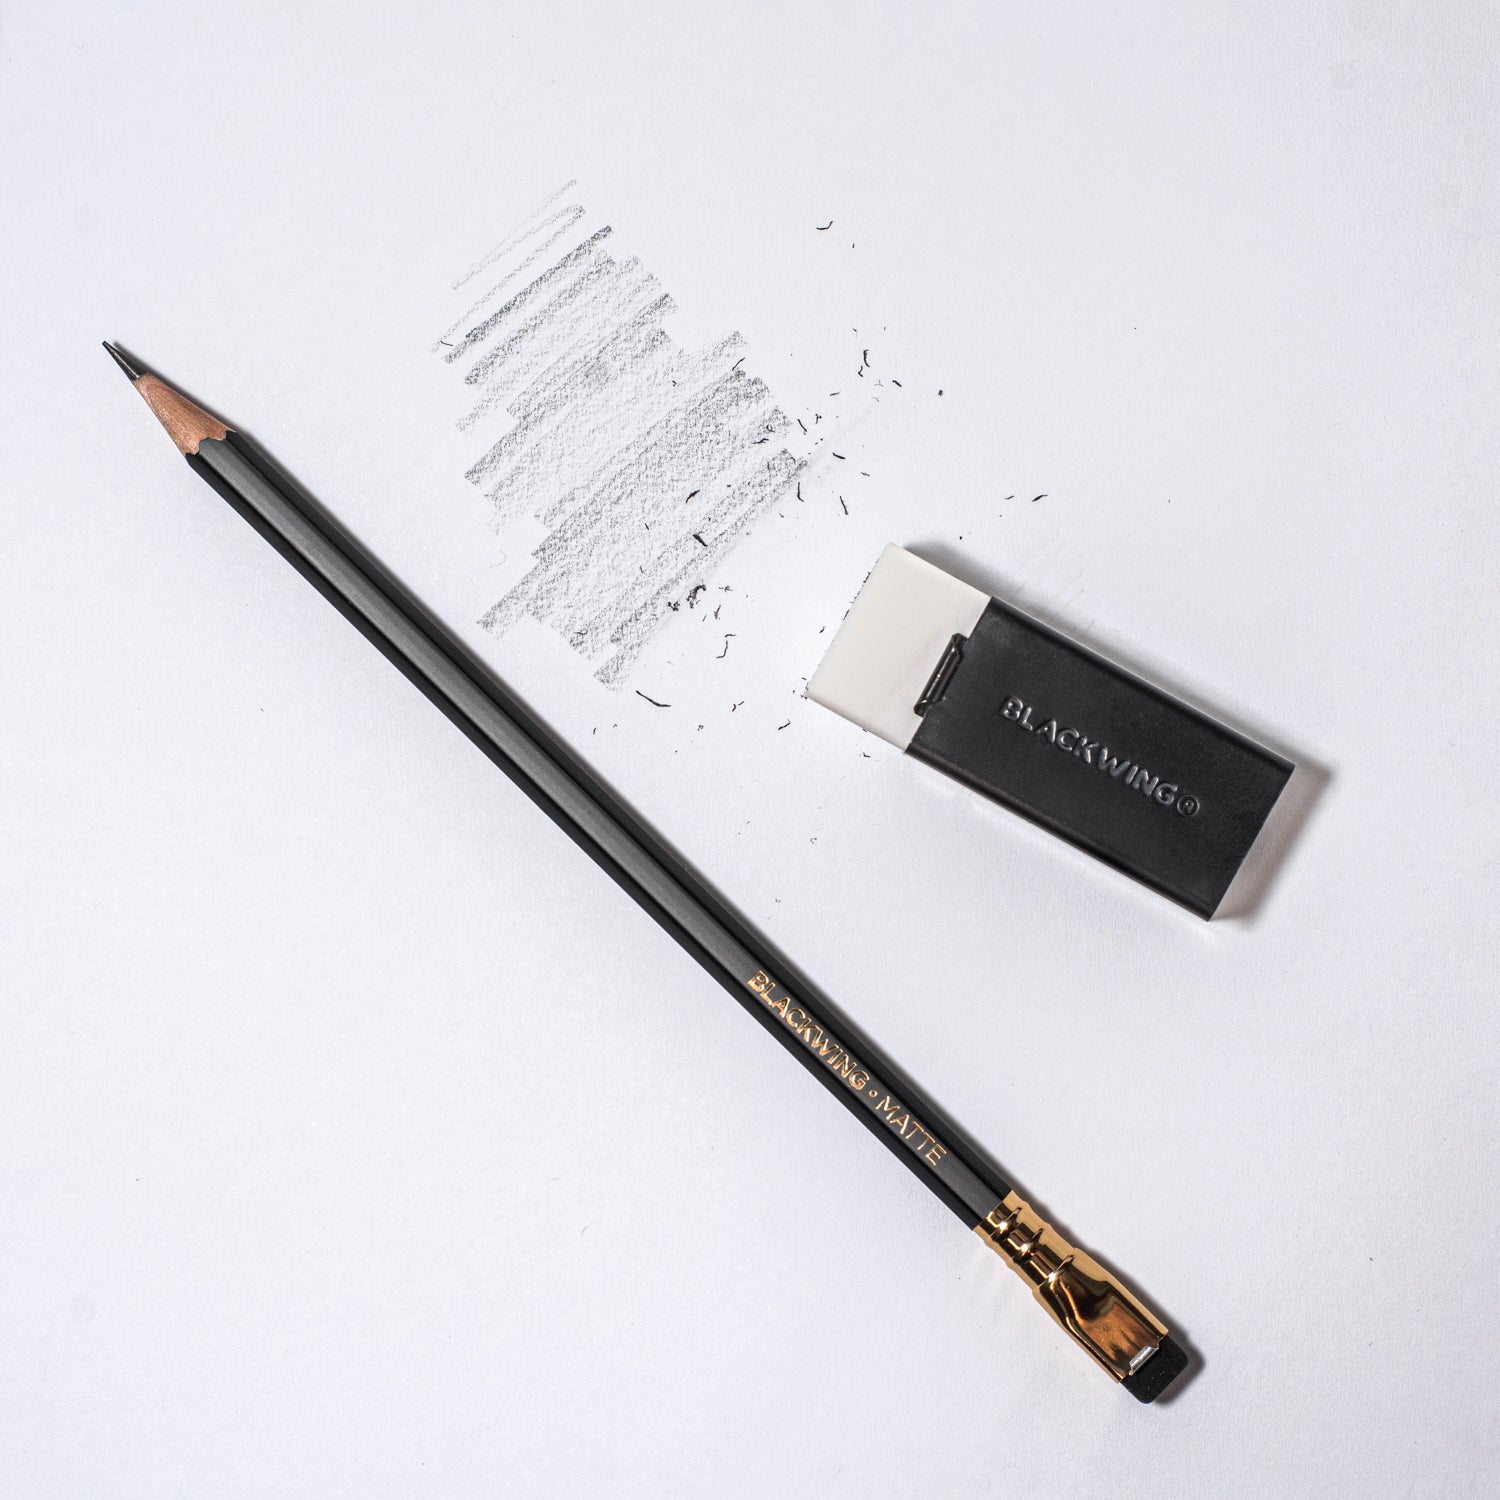 A Blackwing Soft Handheld Eraser + Holder and an eraser on a white surface.